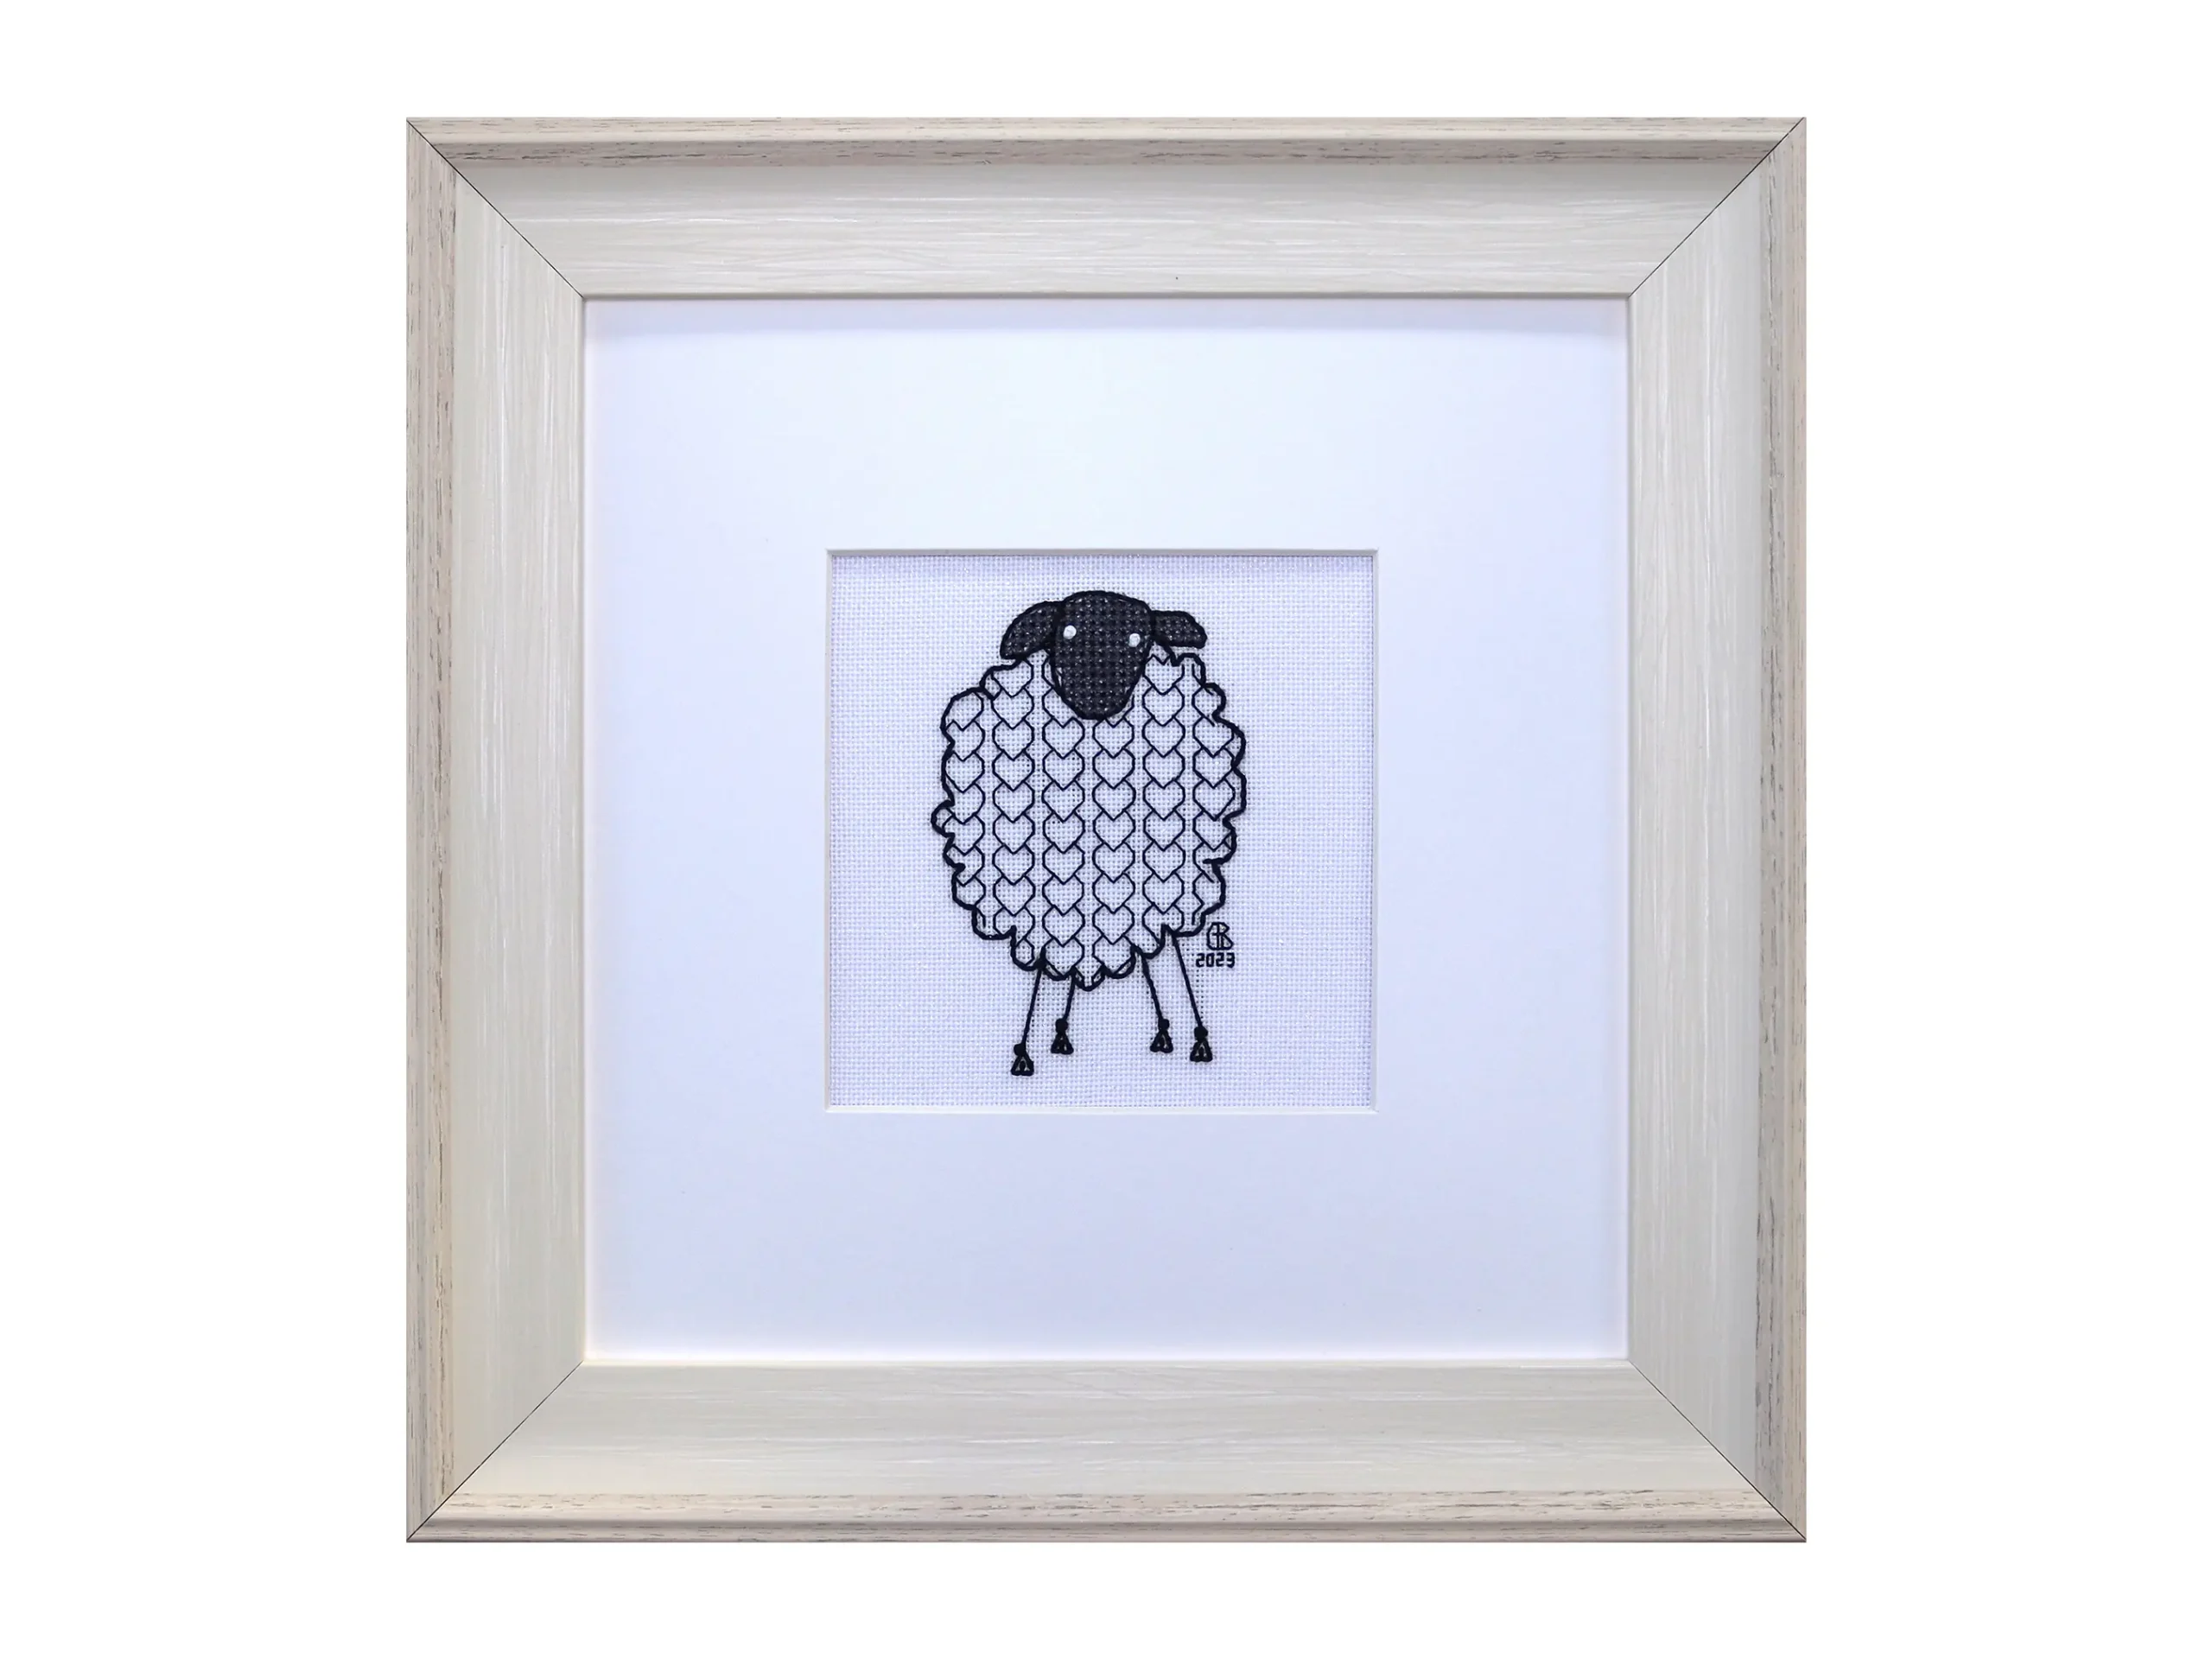 Mini Sheep Hearts Blackwork Embroidery Kit or Pattern